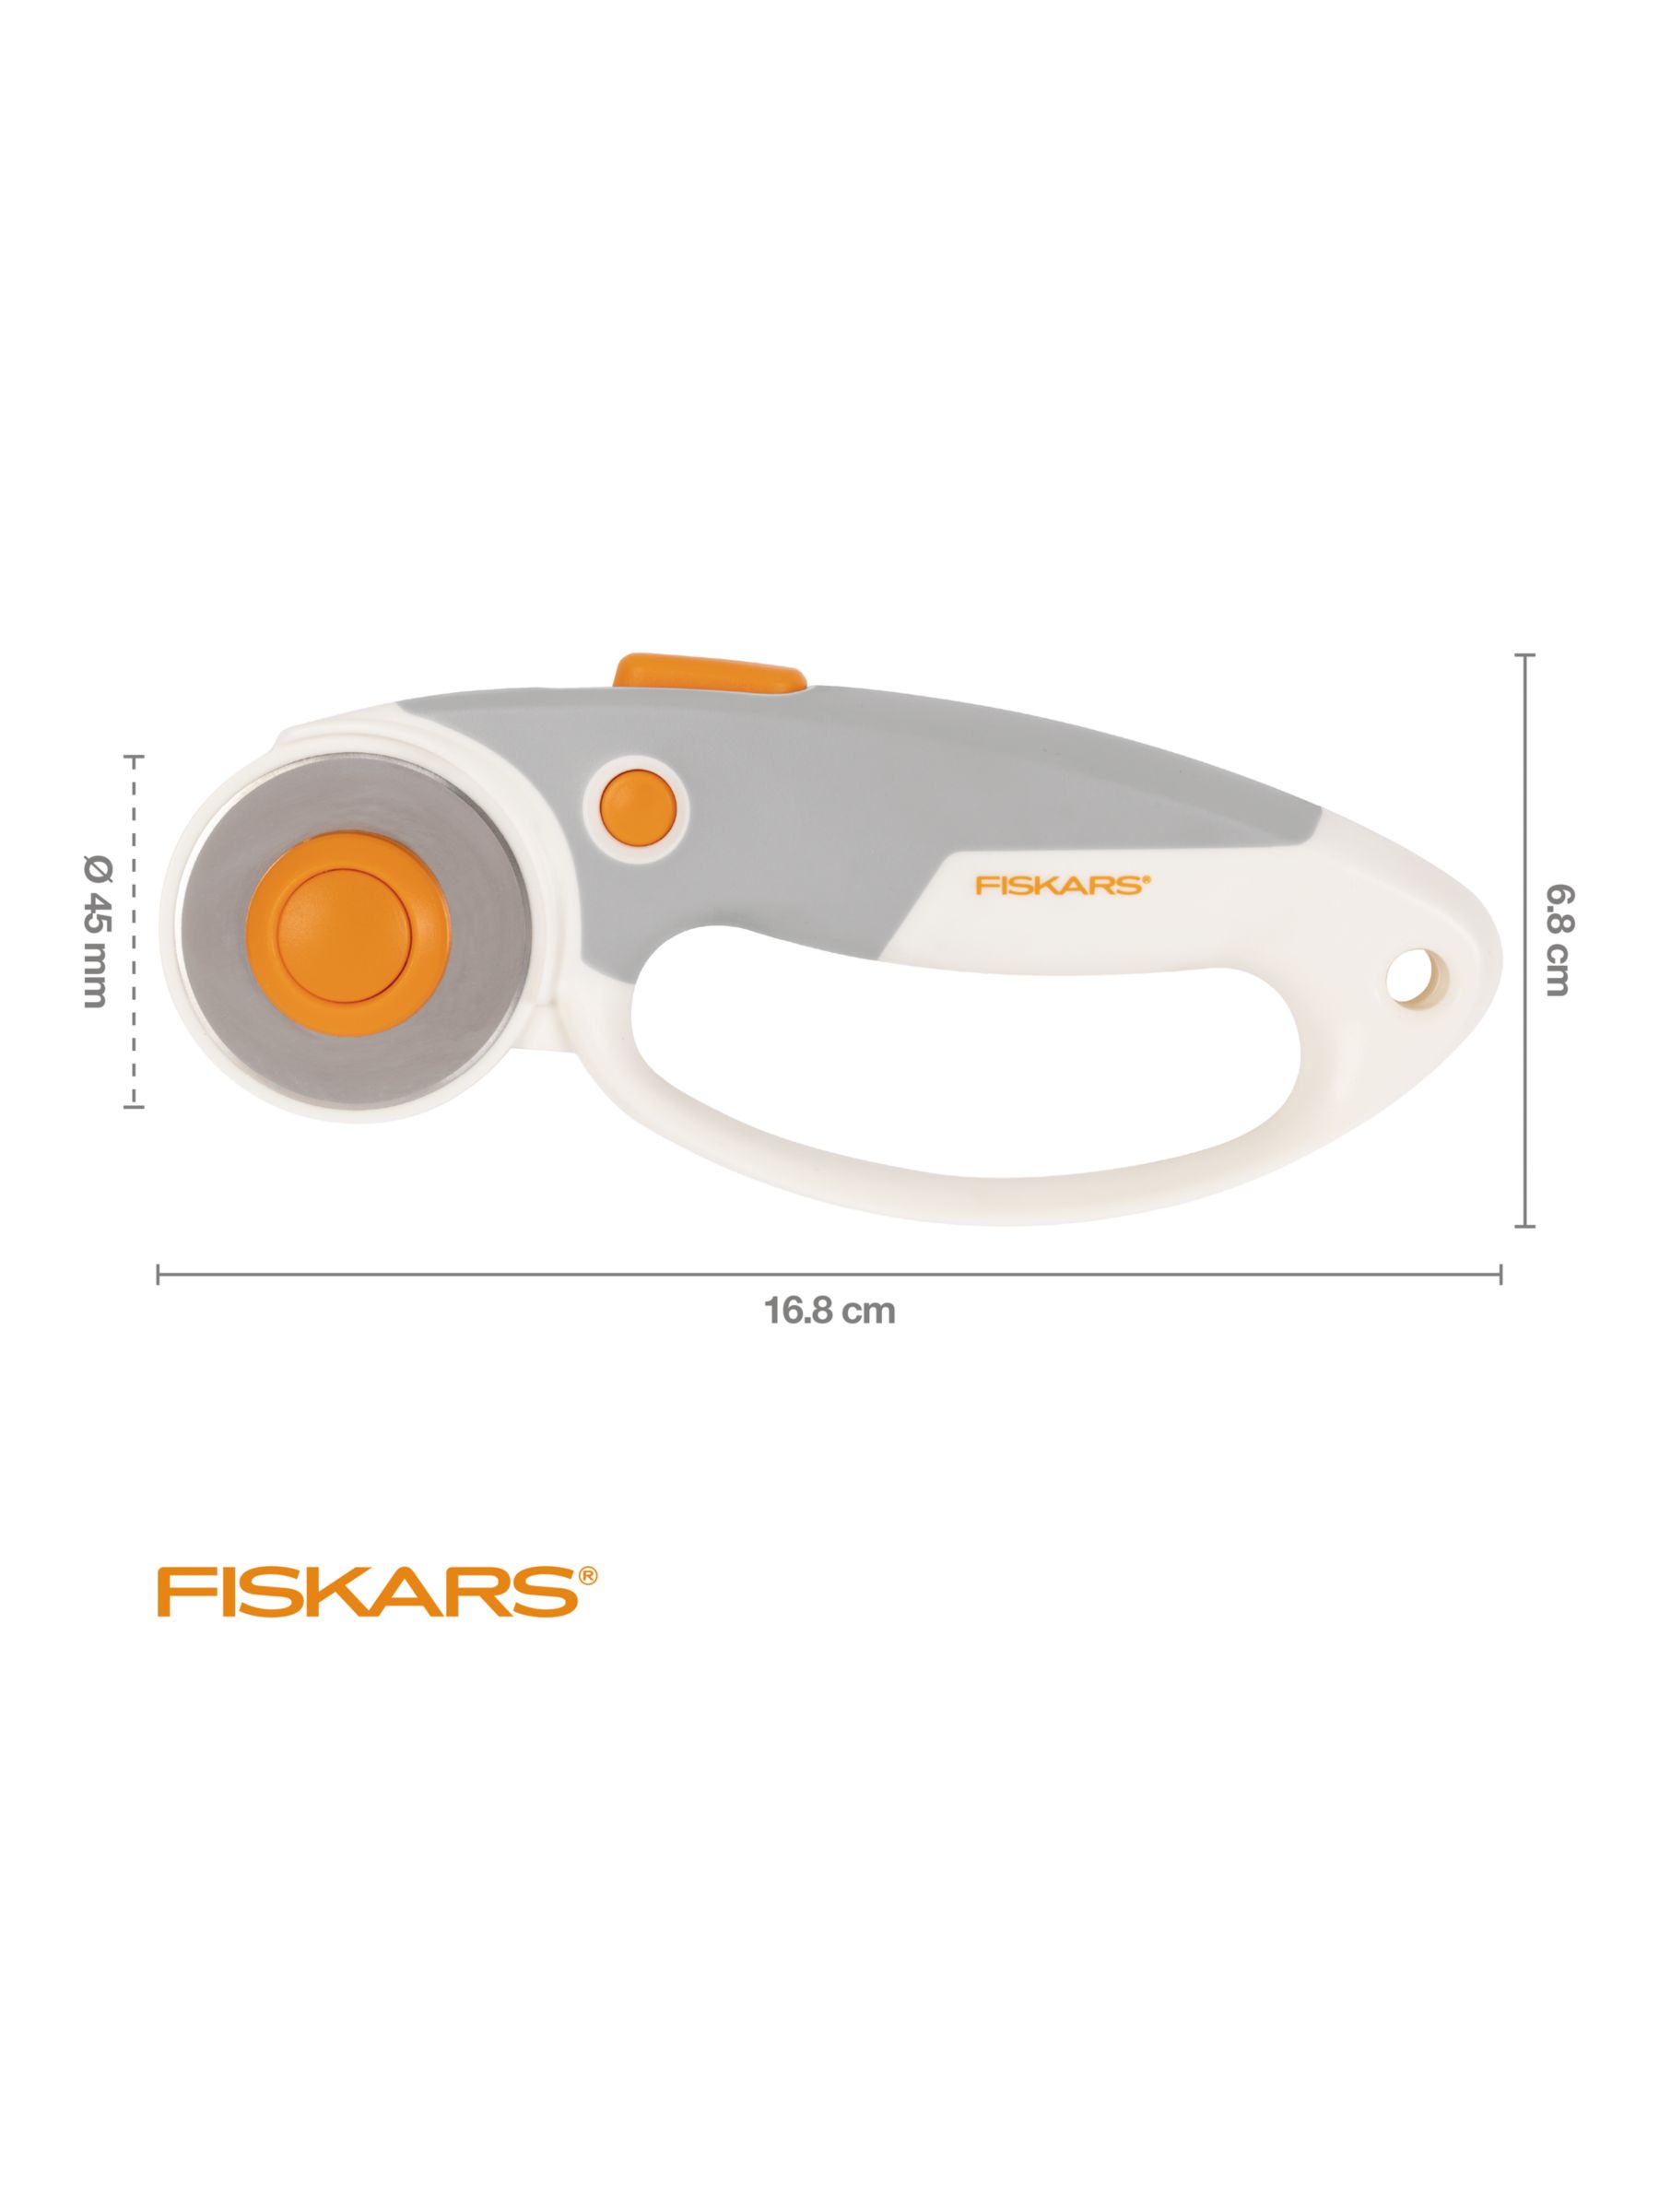 Fiskars® Rotary Cutter